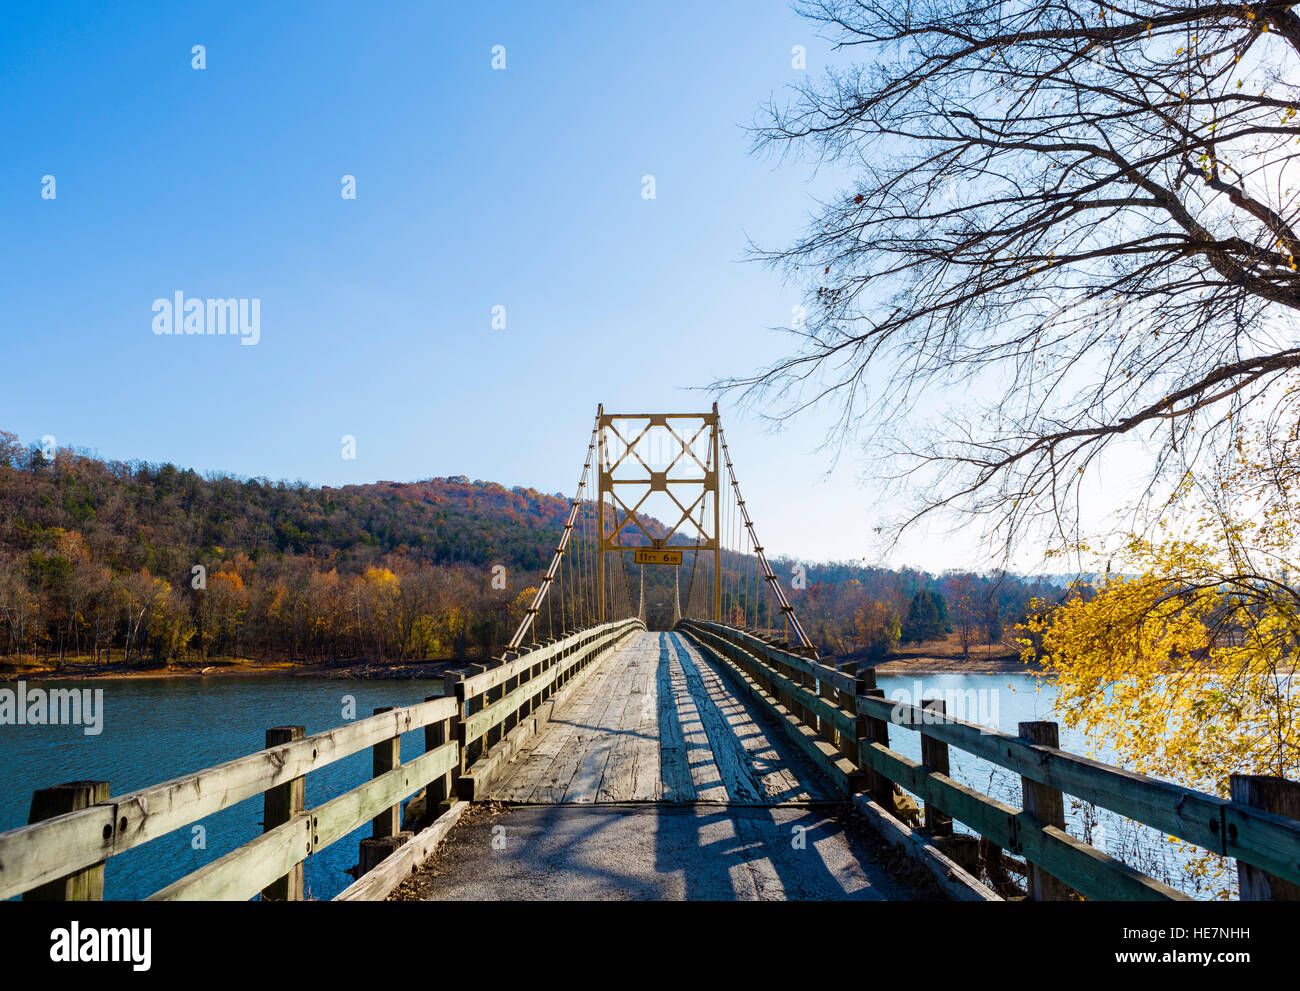 Castoro storico ponte sopra il Fiume Bianco, Table Rock Lake, castoro, monti Ozark, Arkansas, STATI UNITI D'AMERICA Foto Stock